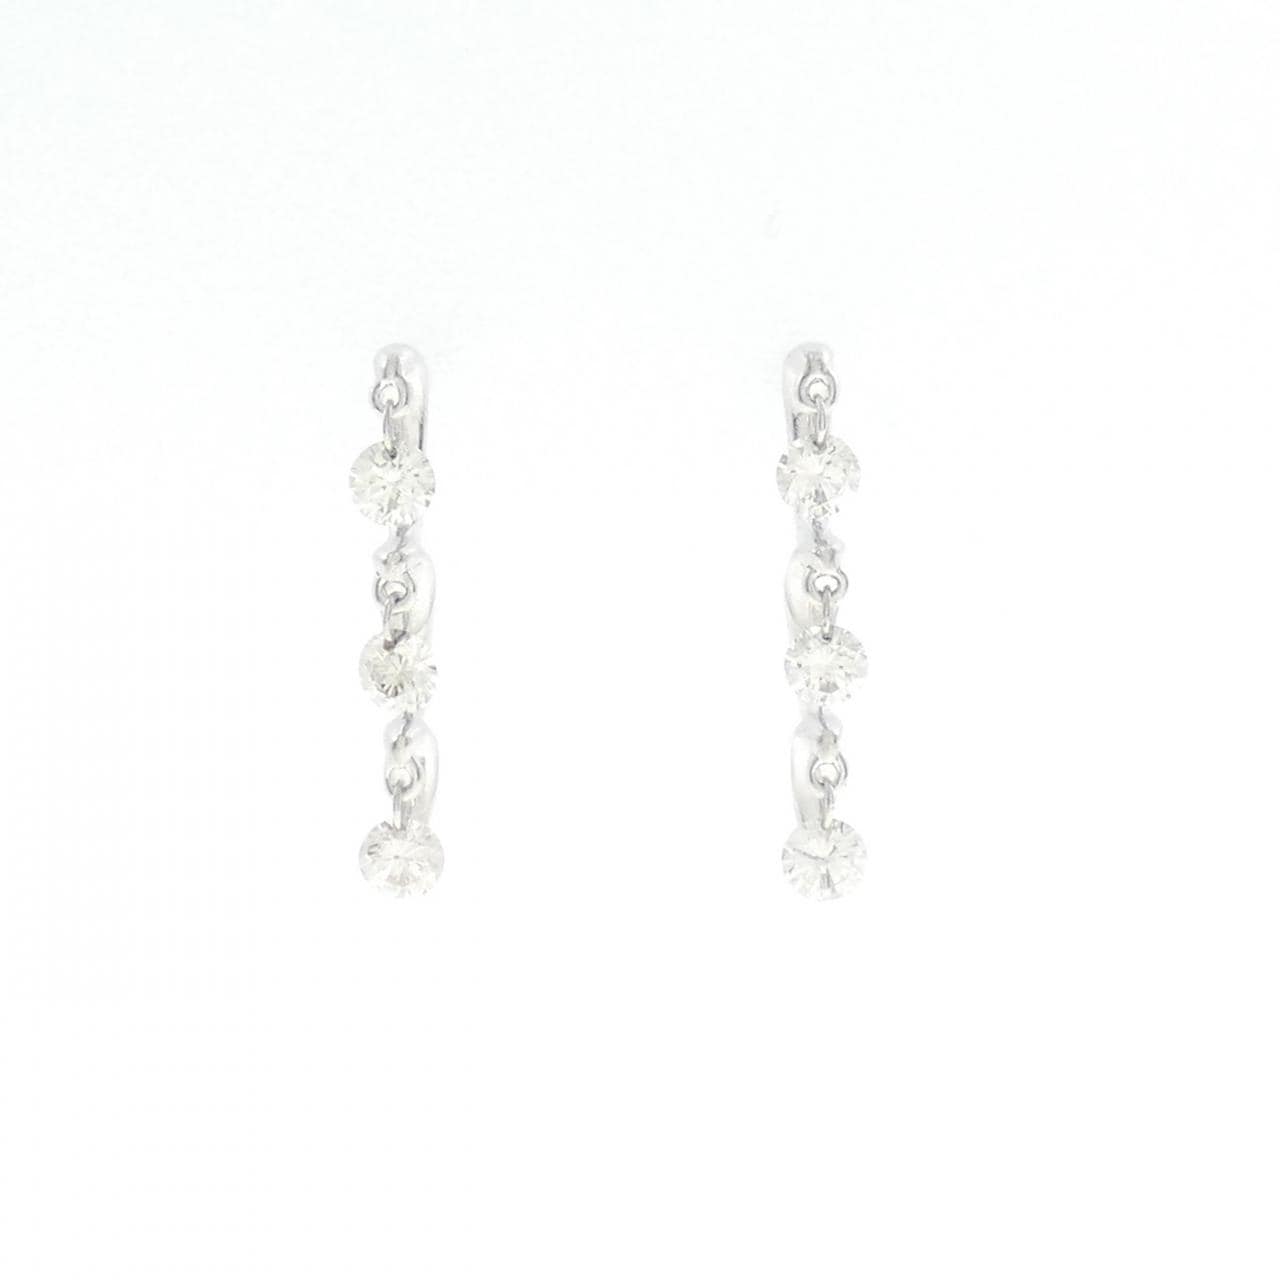 K18WG three stone Diamond earrings 0.62CT